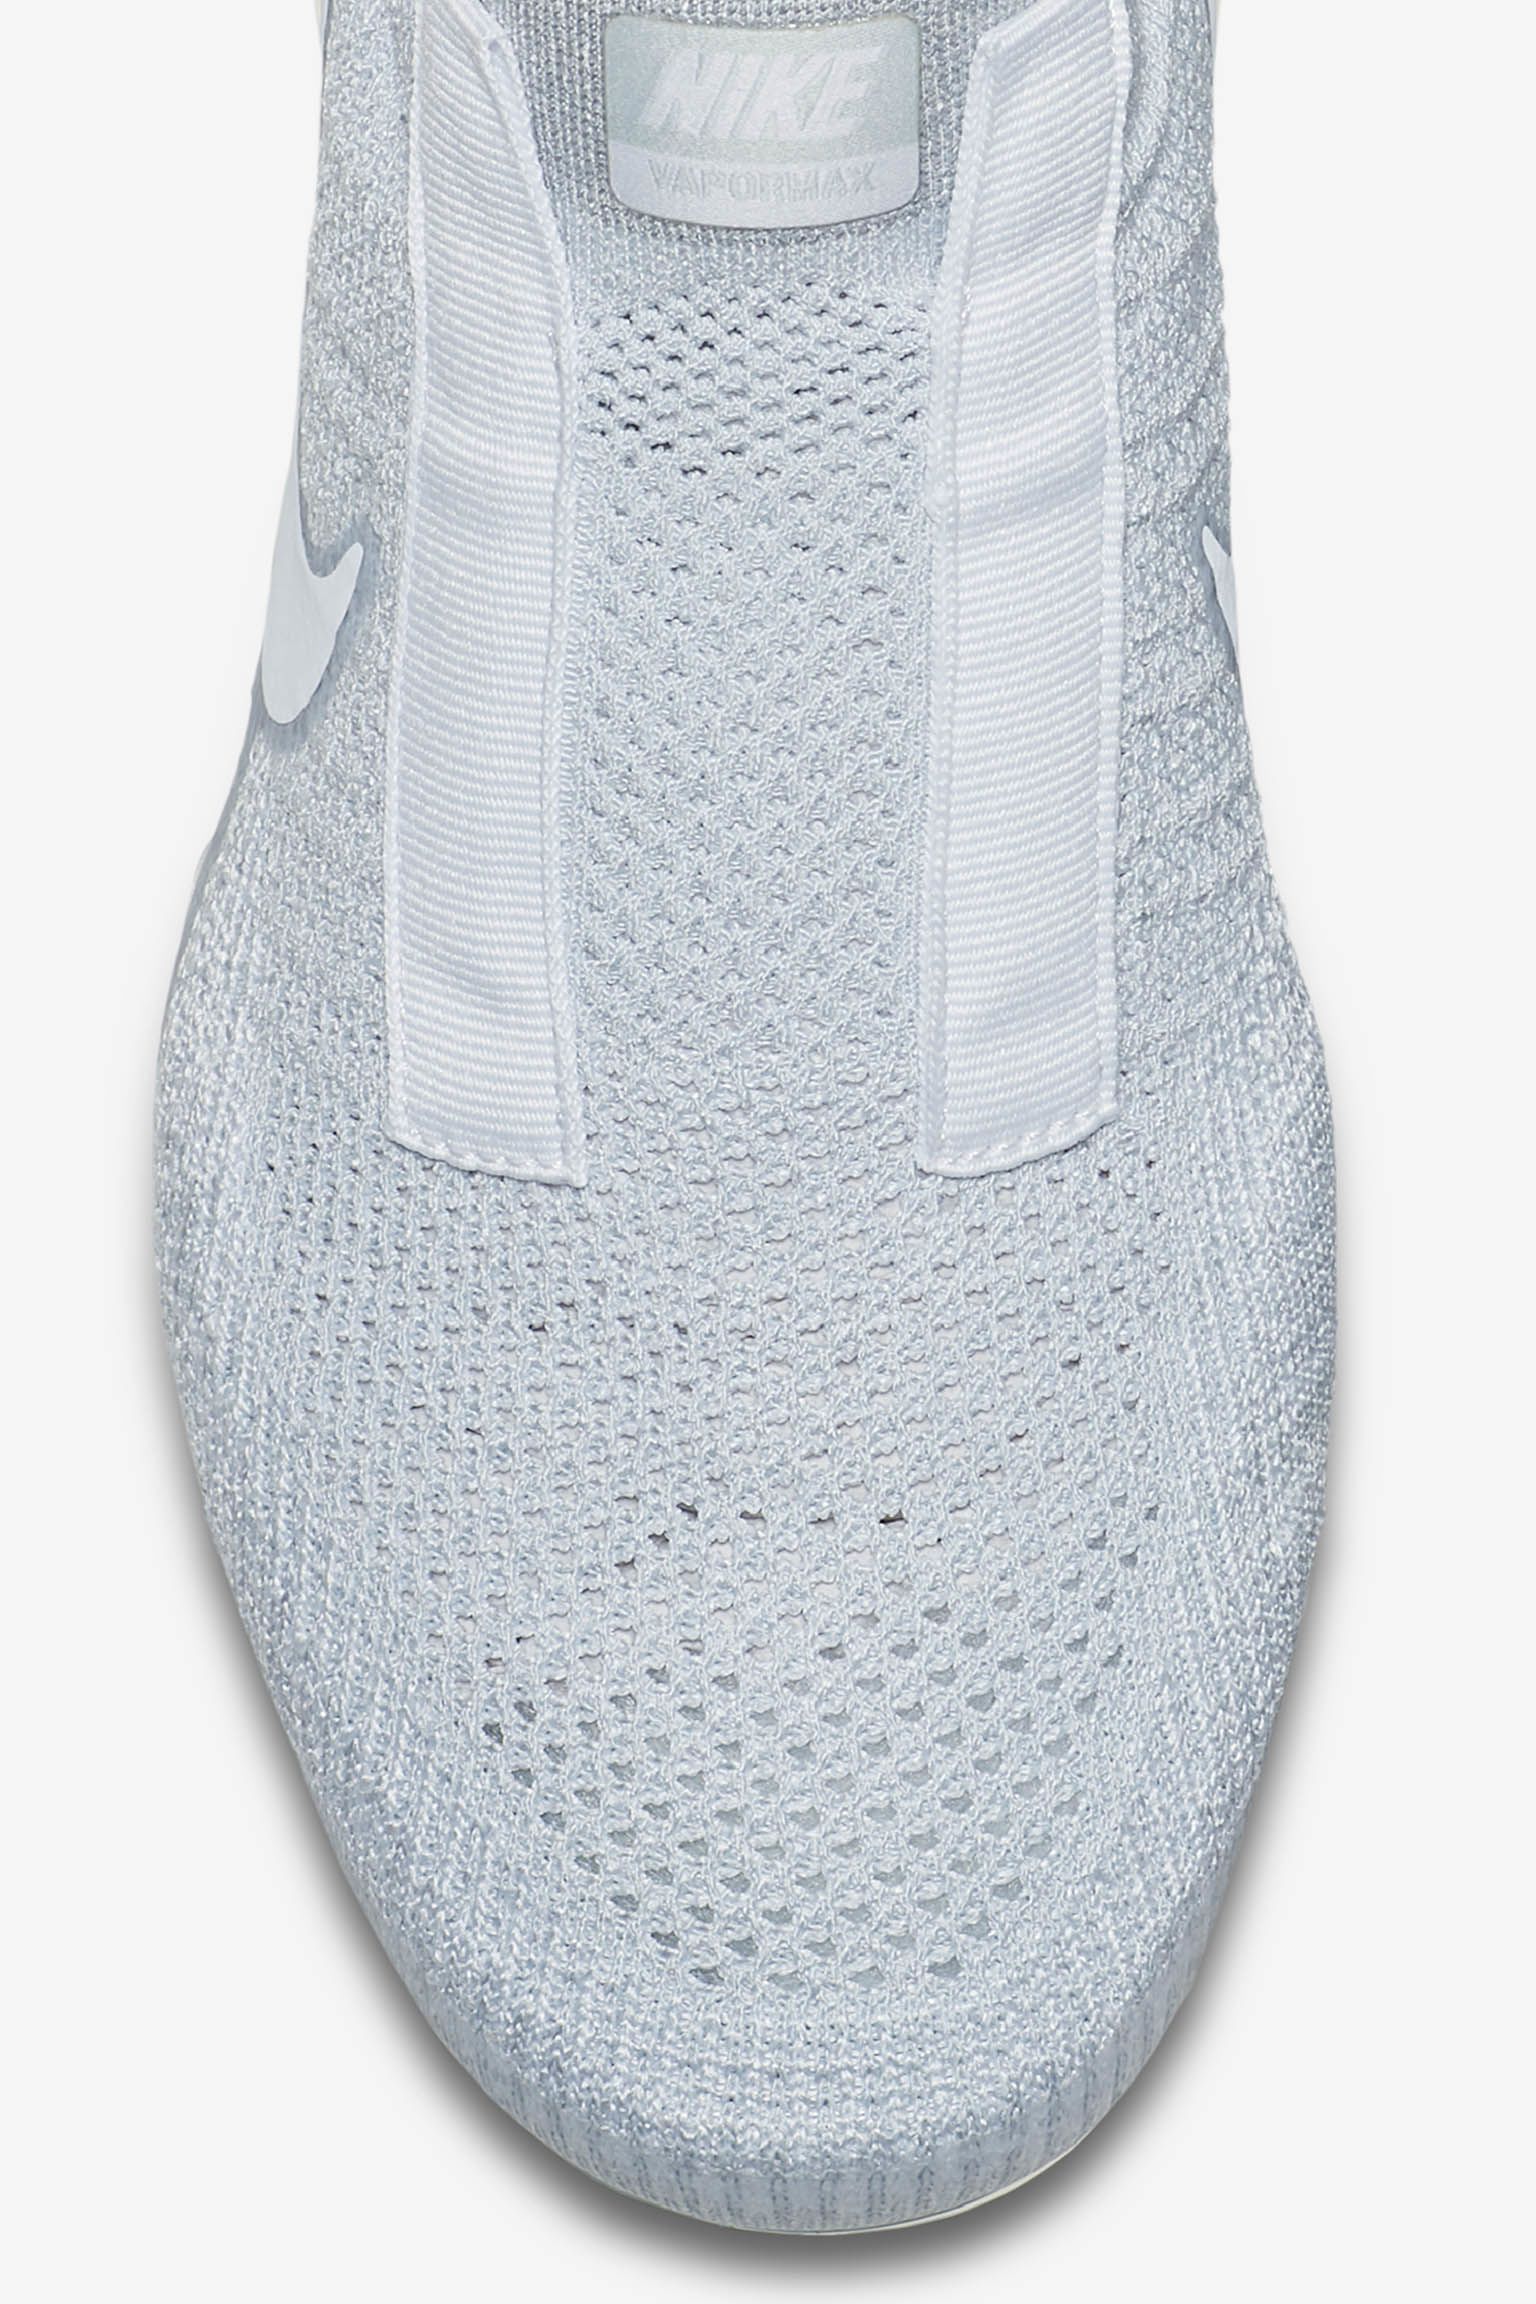 de lanzamiento de las VaporMax "Pure Platinum &amp; White". Nike SNKRS ES